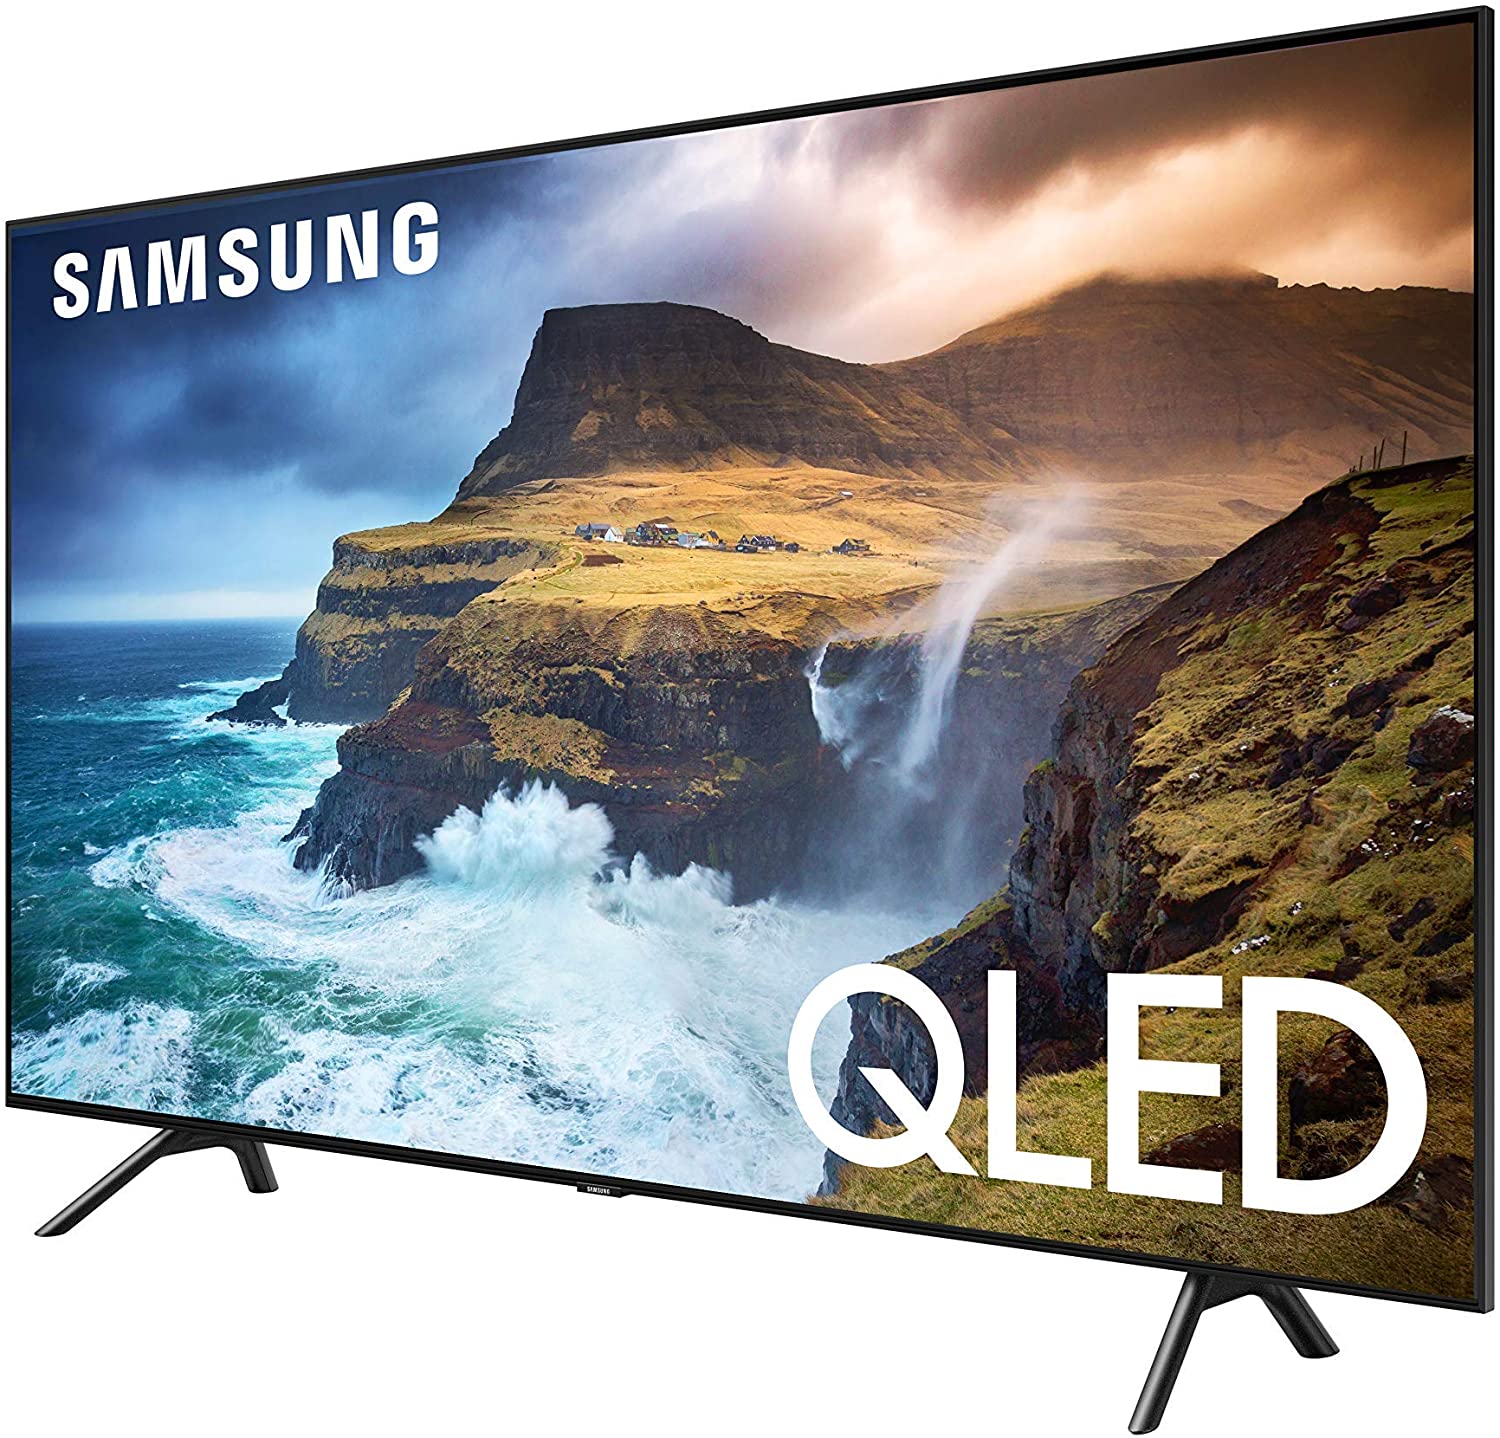 Samsung Smart TV 75" Class Q7-Series 4K Ultra HD - HDR QLED (Refurbished)